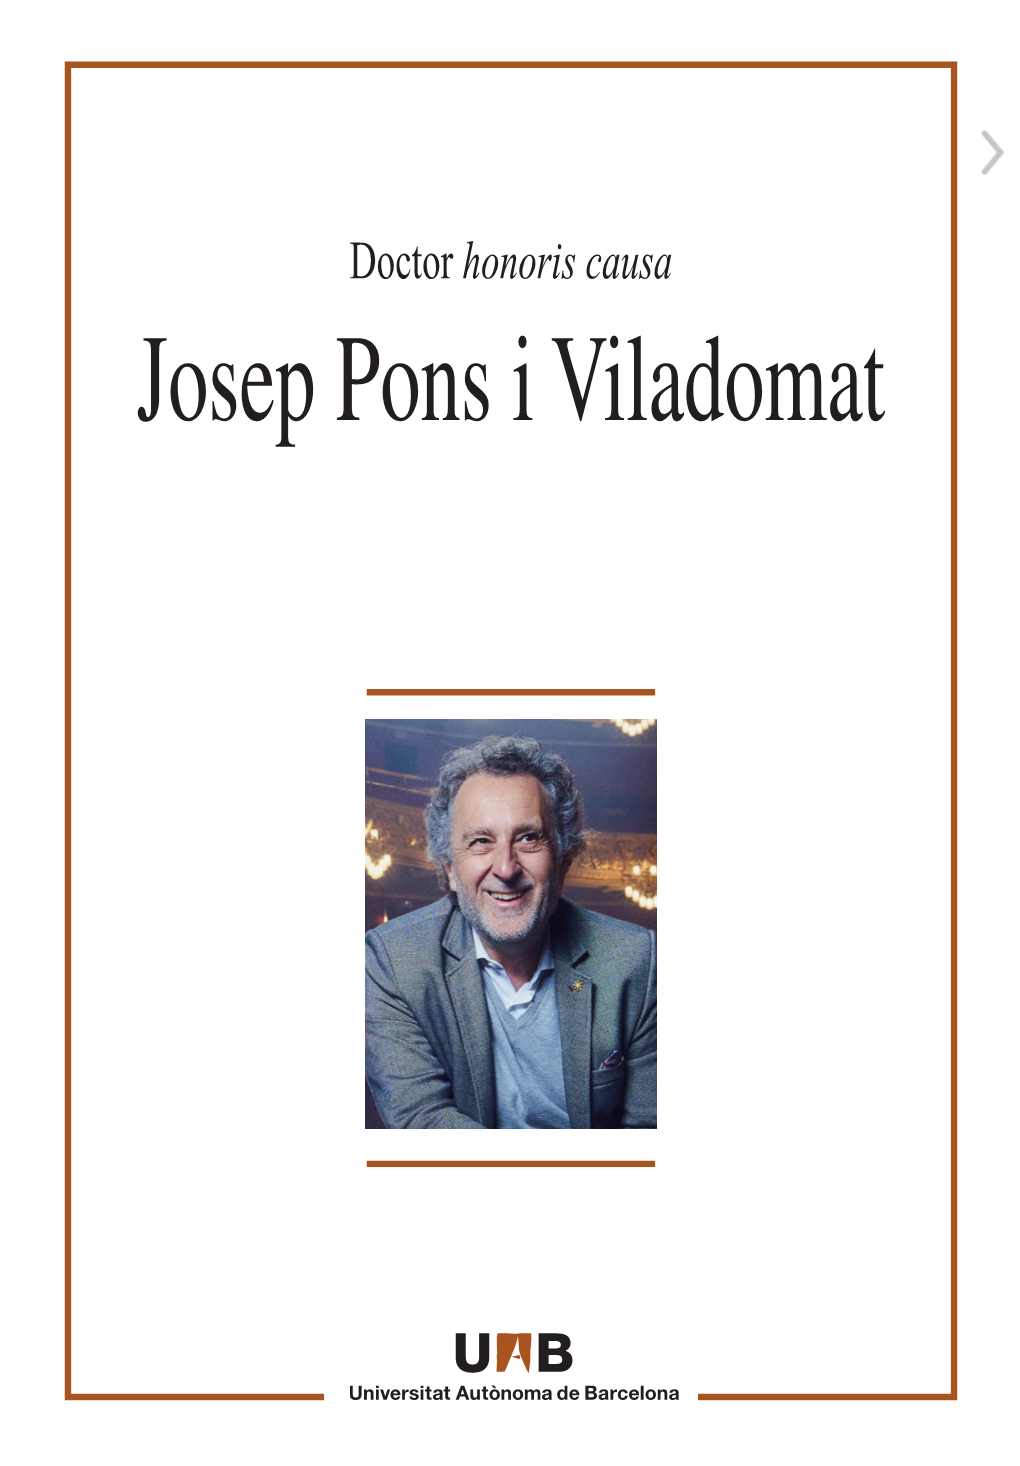 Honoris Causa Josep Pons I Viladomat Doctor Honoris Causa Josep Pons I Viladomat